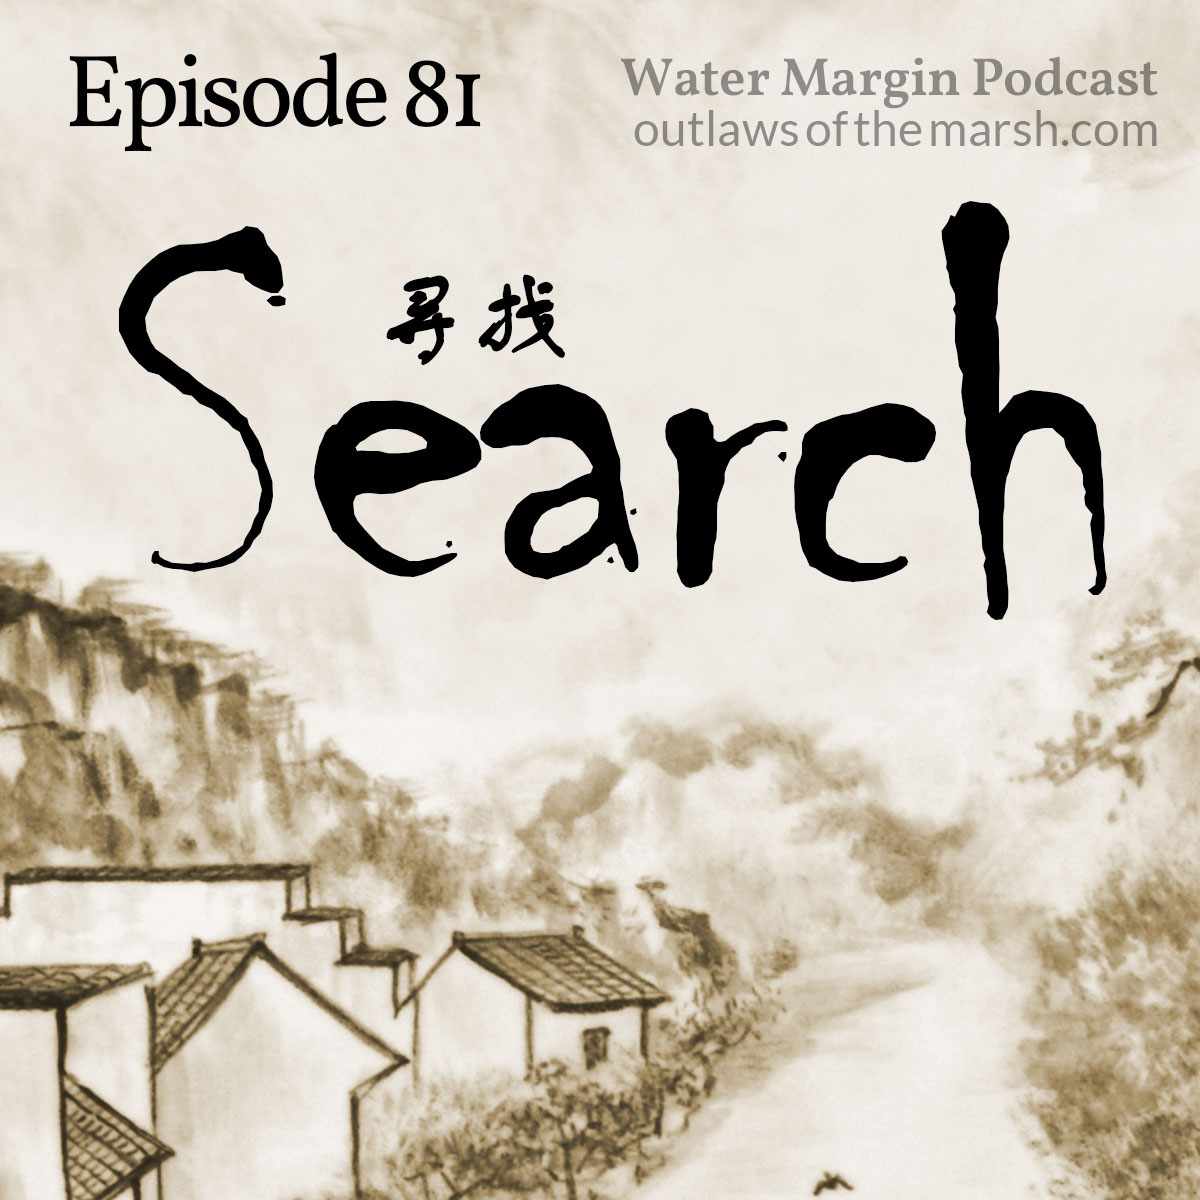 Water Margin Podcast: Episode 081